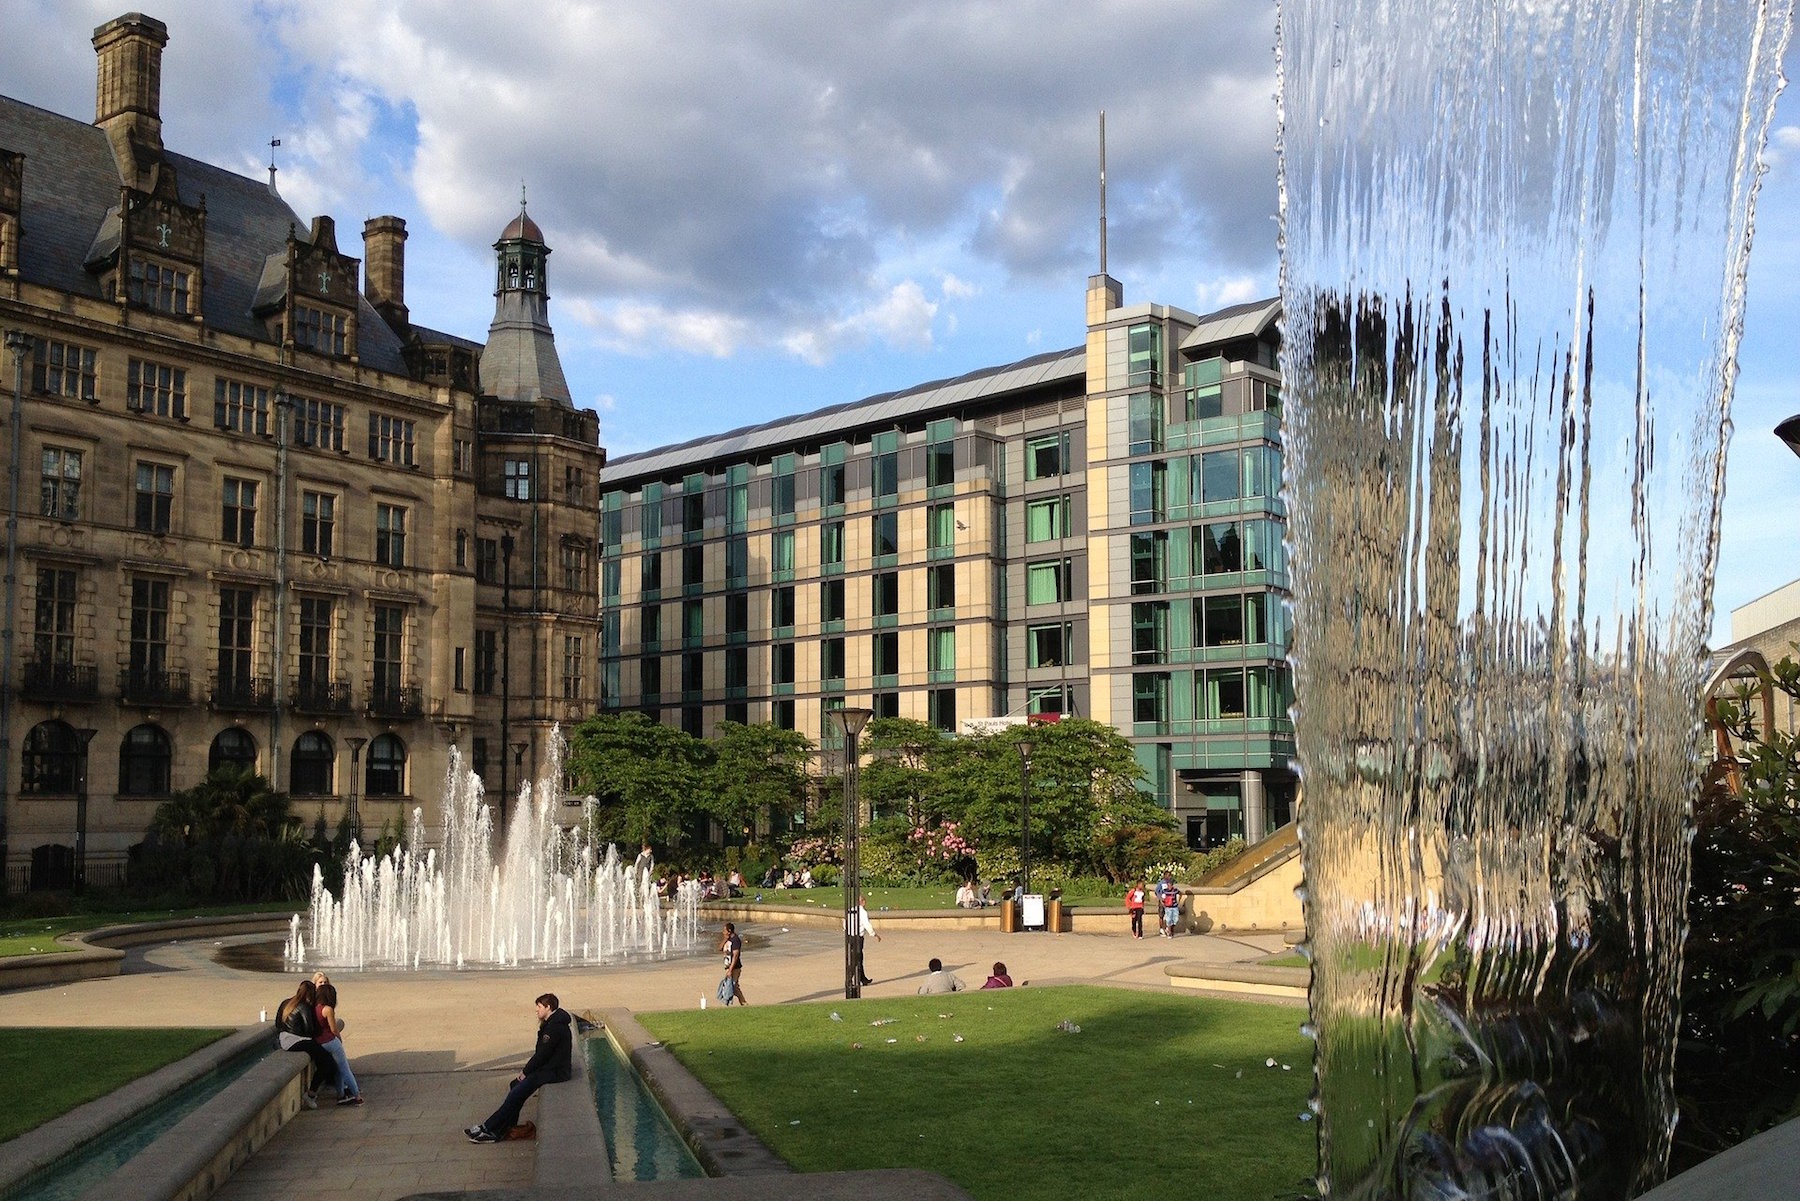 Sheffield Peace Gardens